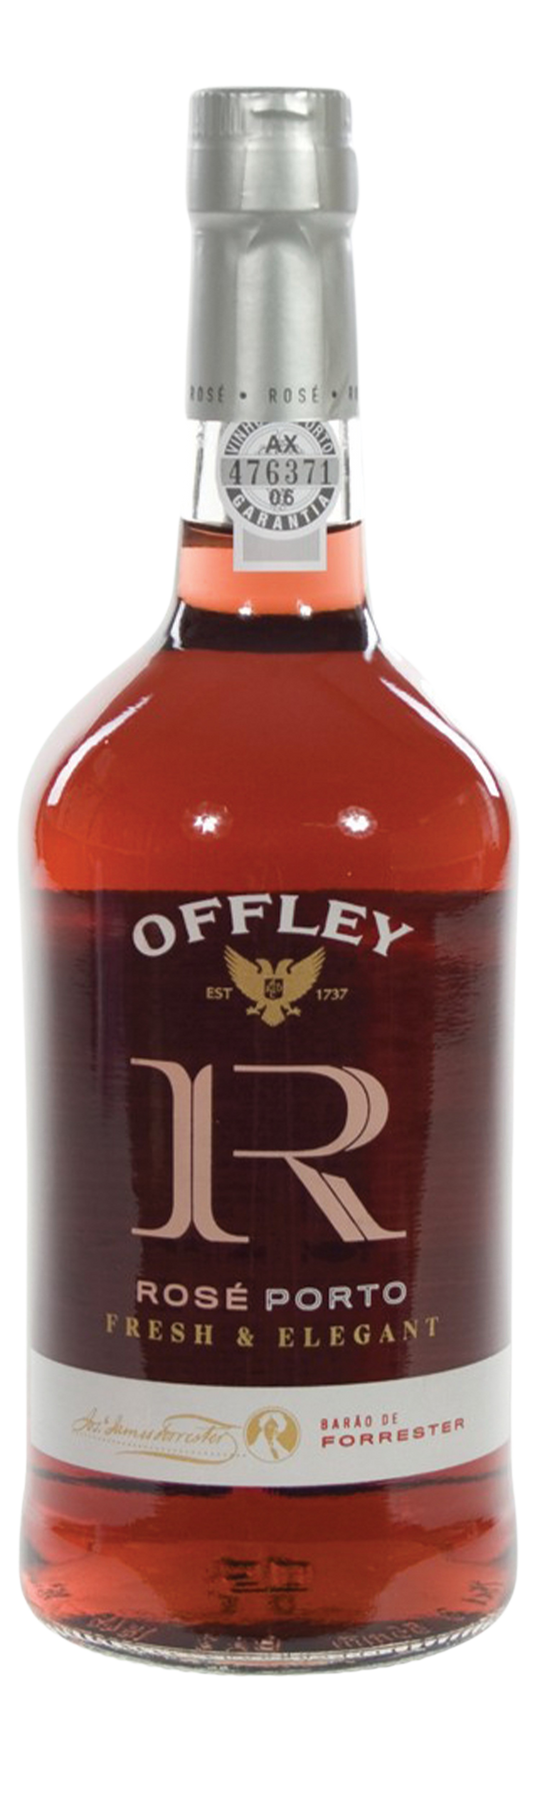 Offley Rosé 18% 75cl Porto